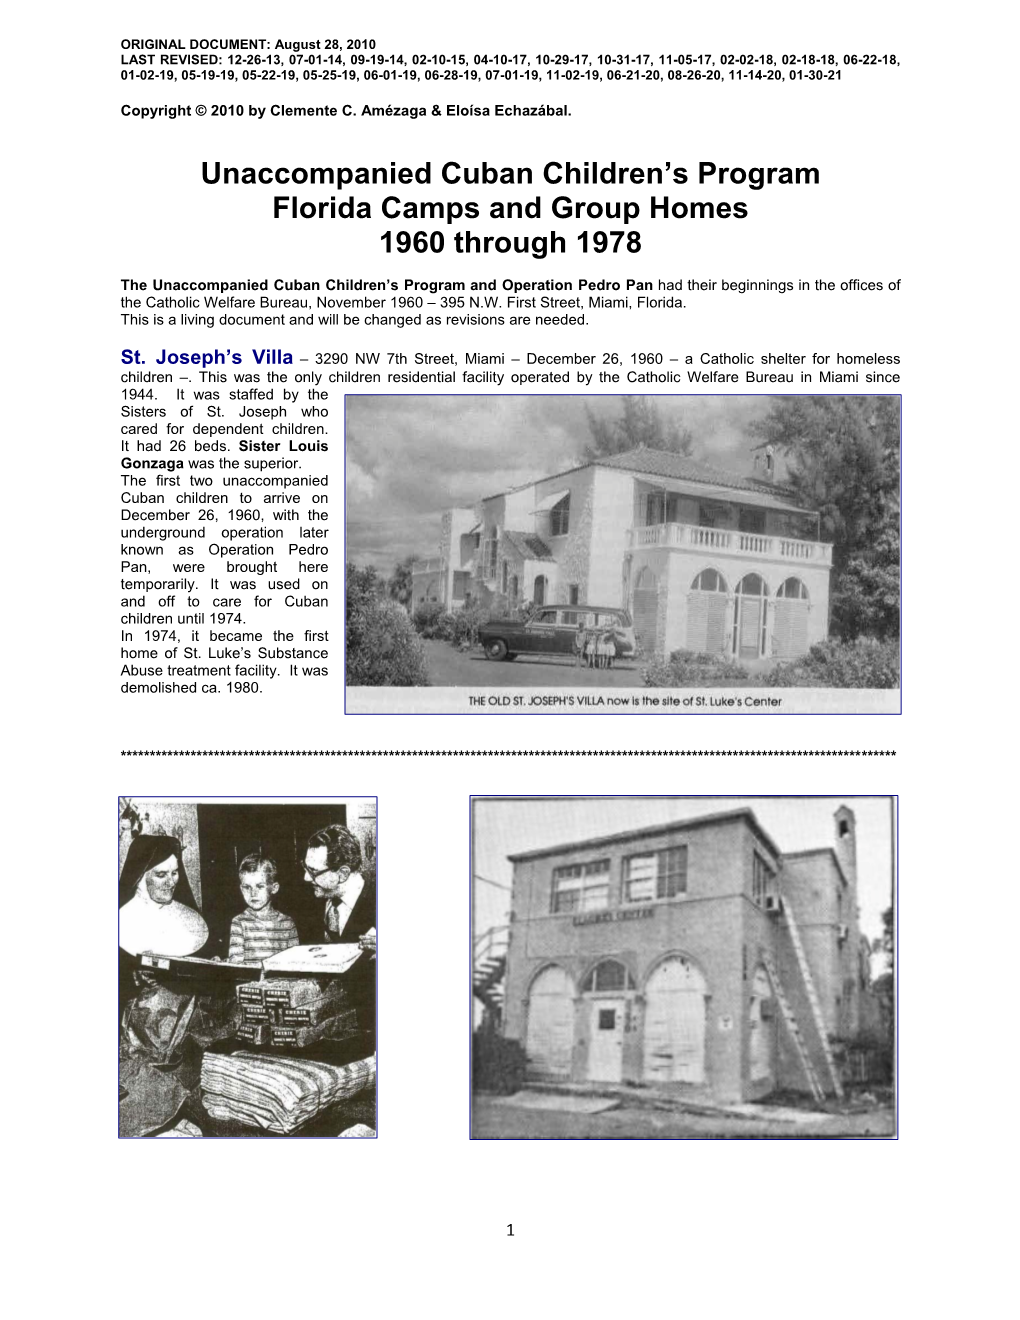 Unaccompanied Cuban Children's Program Florida Camps and Group